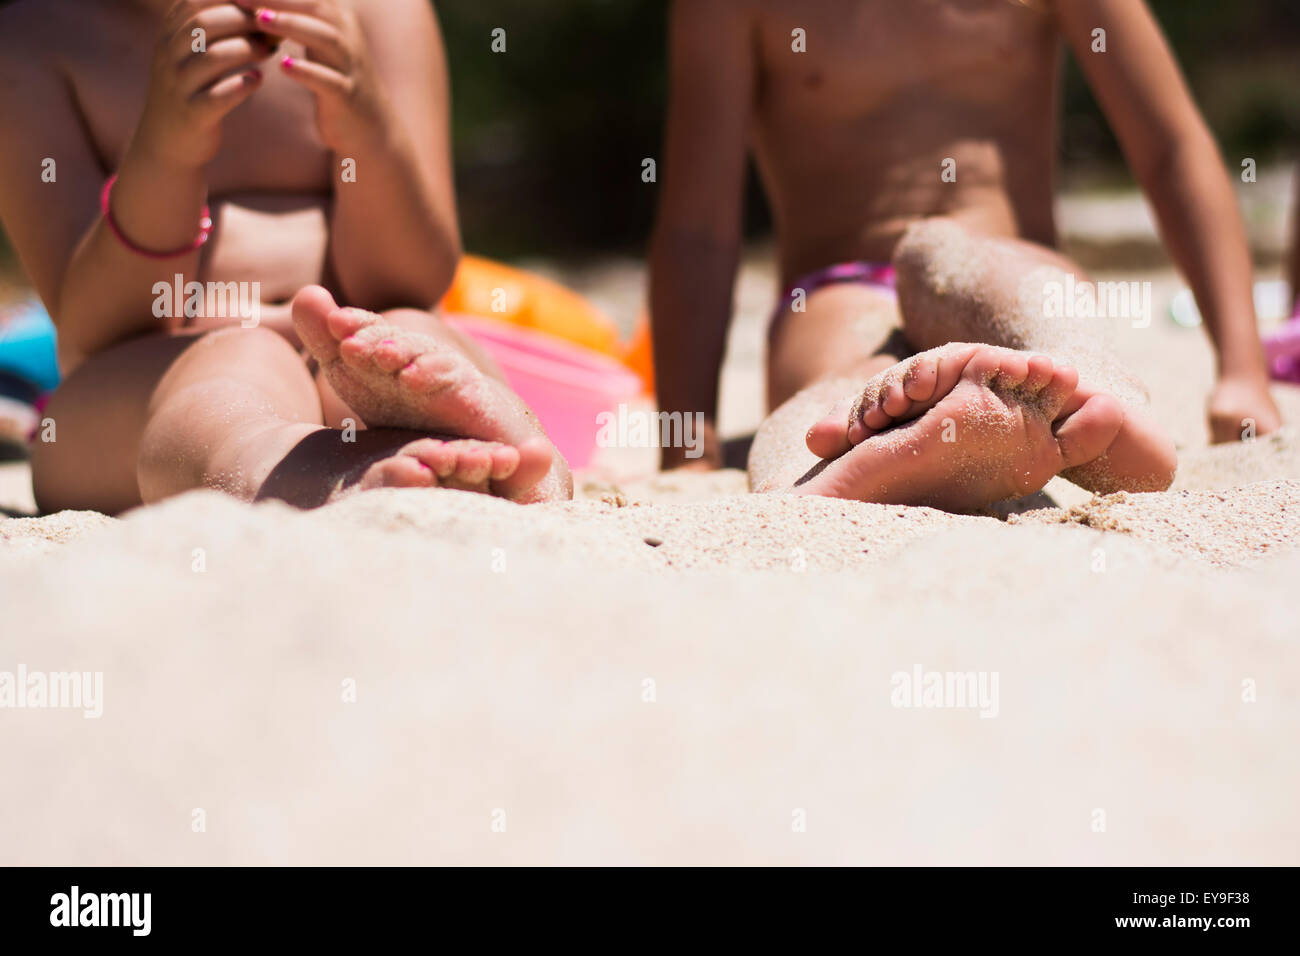 Children having fun spending their time on beach barefoot enjoying sand Stock Photo